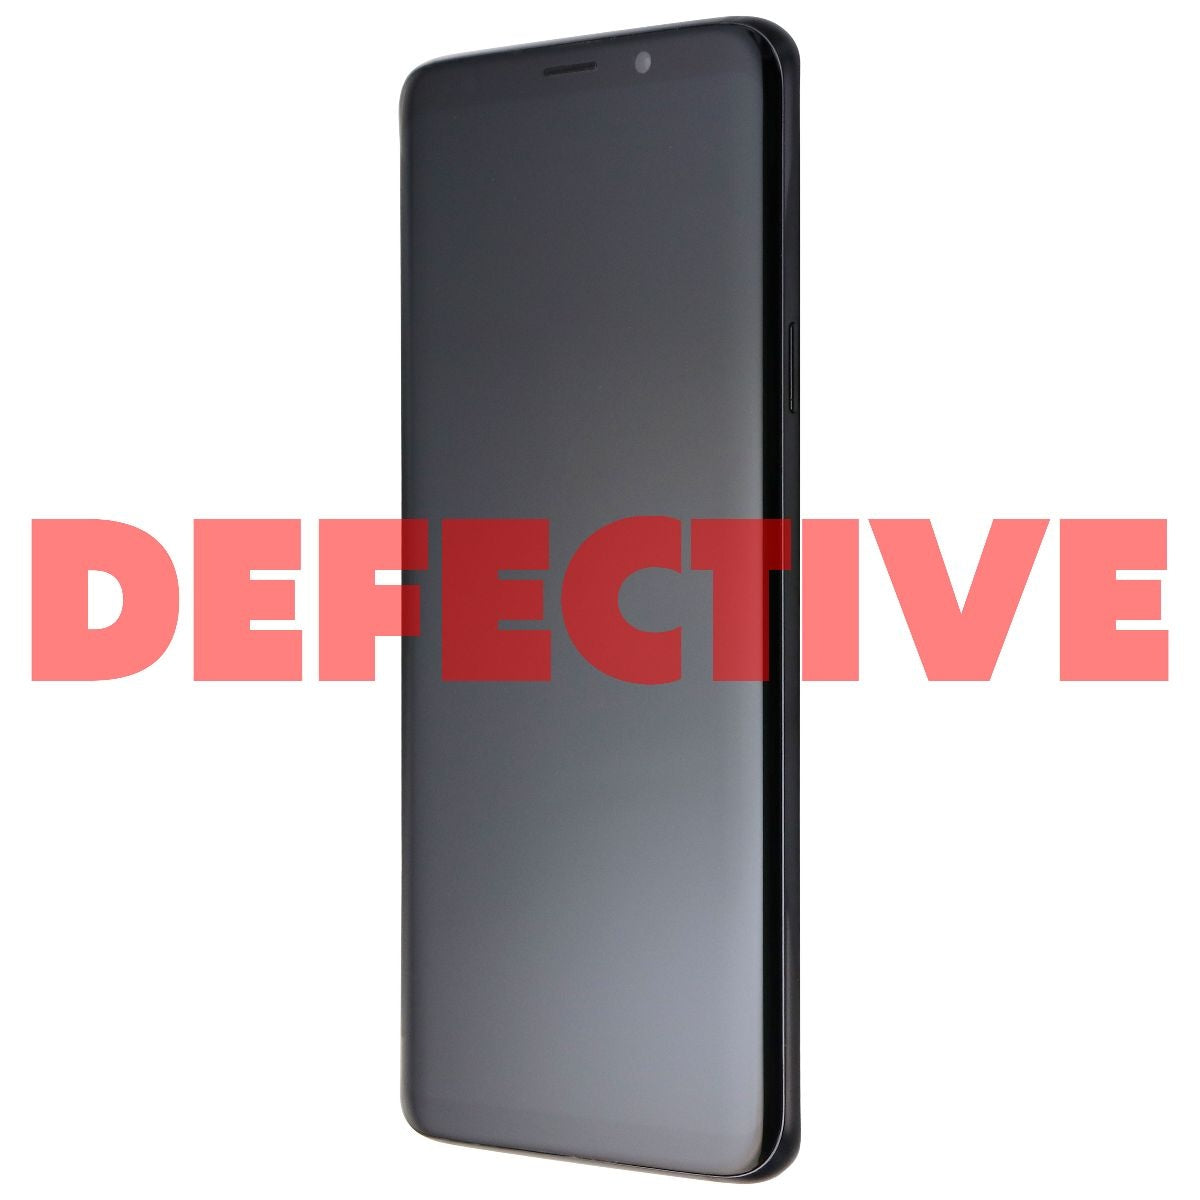 Samsung Galaxy S9+ (6.2-inch) (SM-G965U) Unlocked - 128GB / Midnight Black Cell Phones & Smartphones Samsung    - Simple Cell Bulk Wholesale Pricing - USA Seller